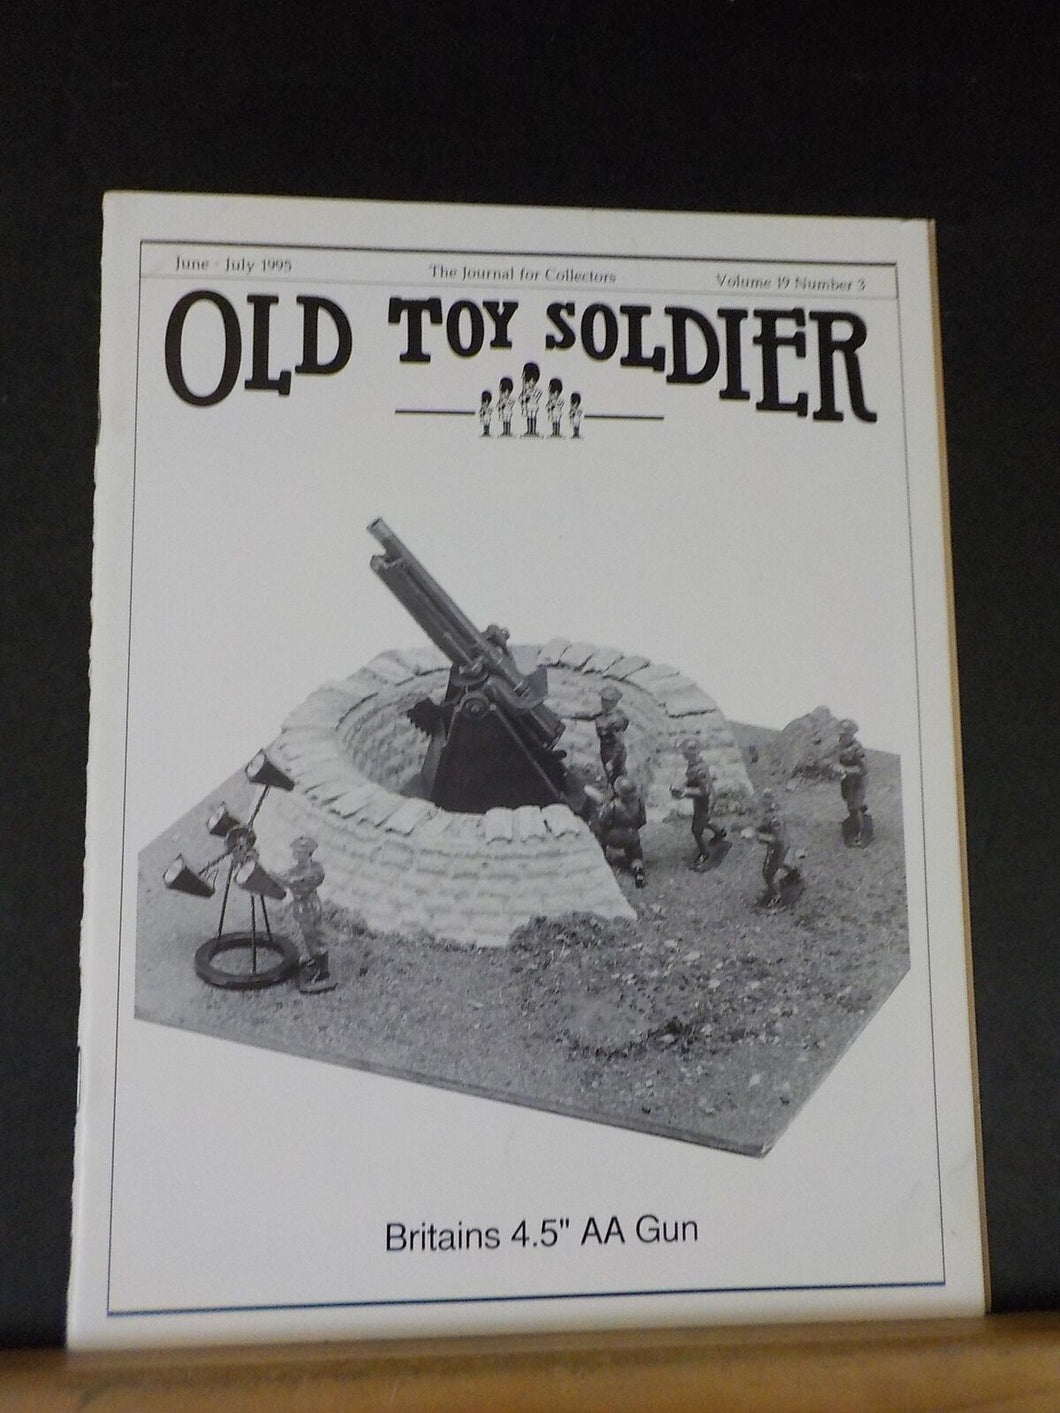 Old Toy Soldier Newsletter Vol 19 #3 1995 June-July Britains 4.5 inch AA Gun